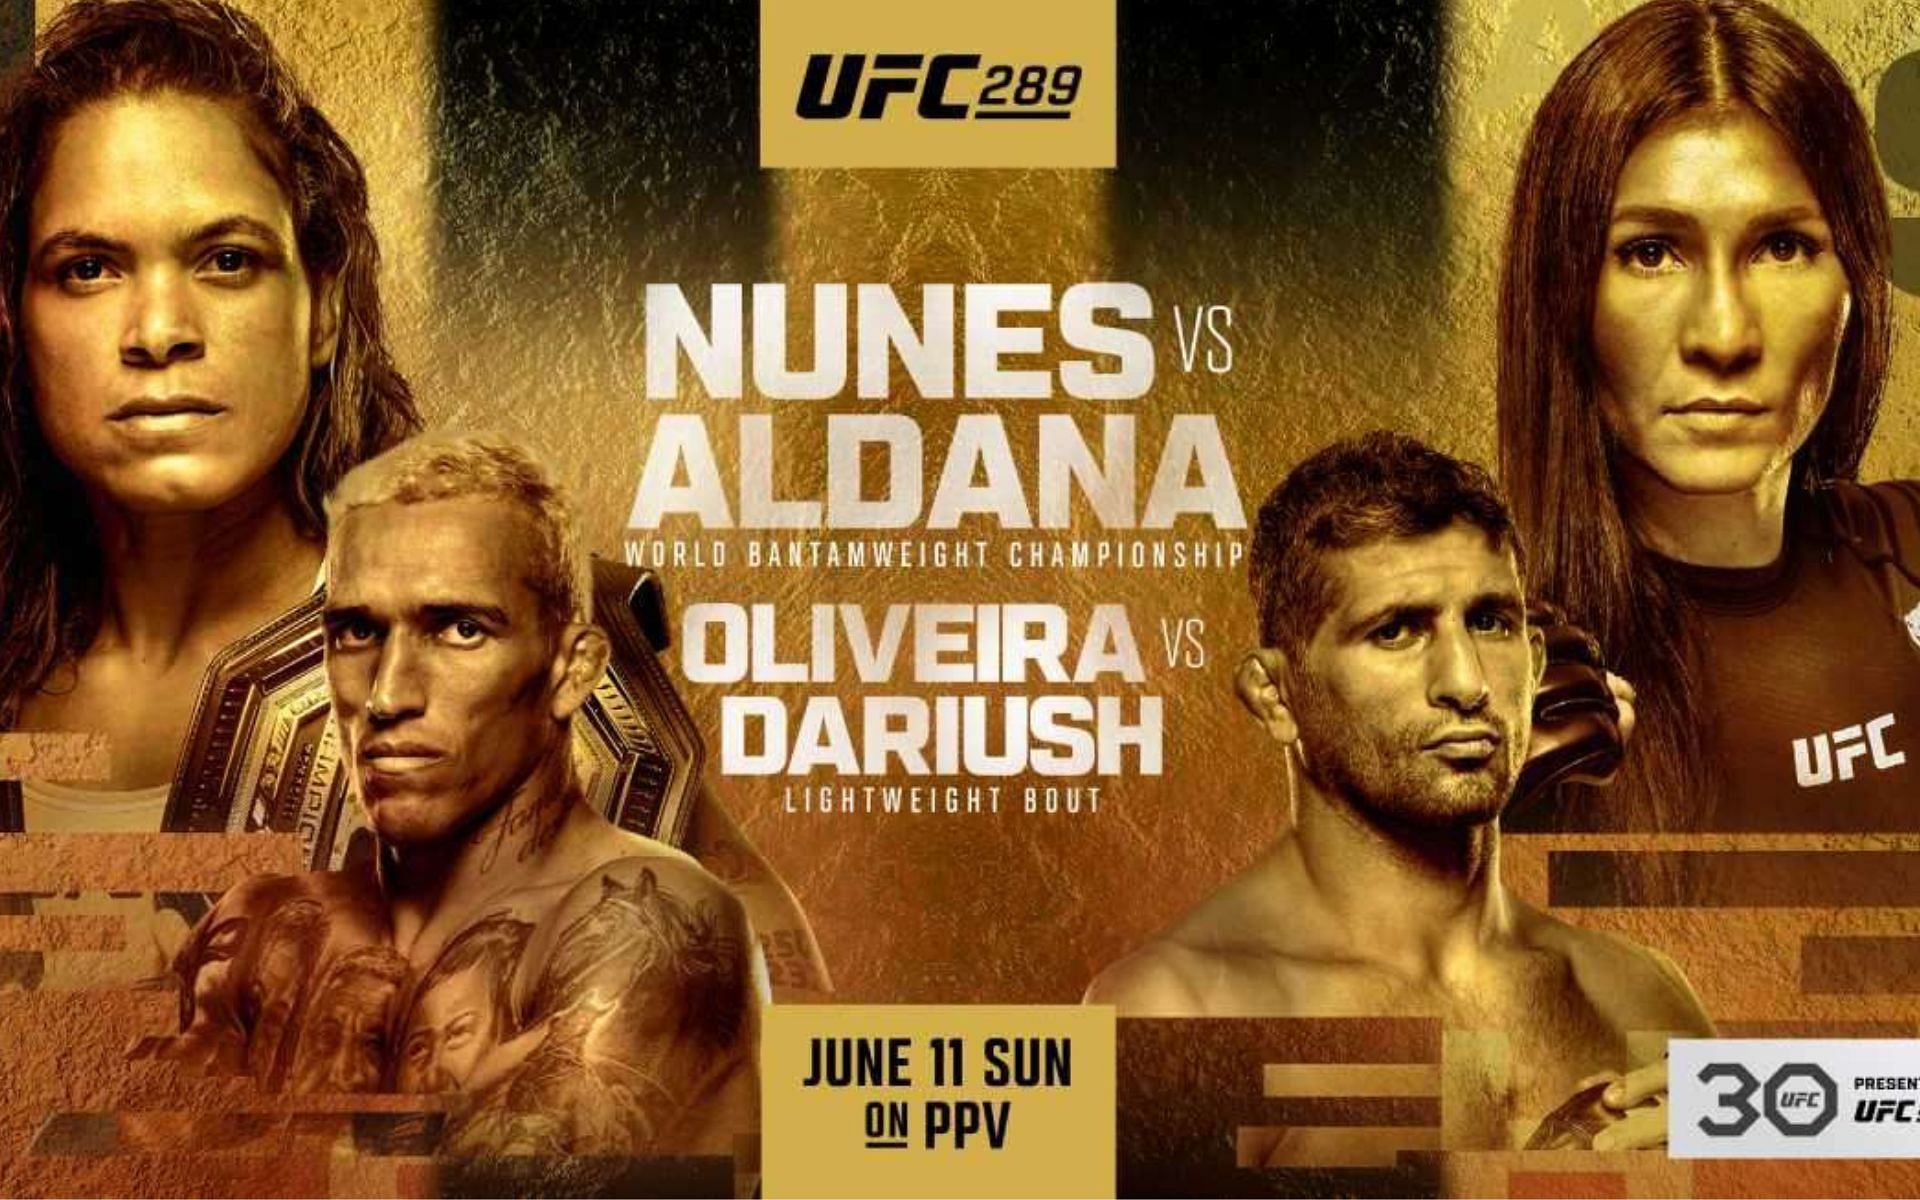 UFC 289 sees Amanda Nunes and Irene Aldana main event, co-main features Oliveira and Dariush (Image courtesy - UFC)